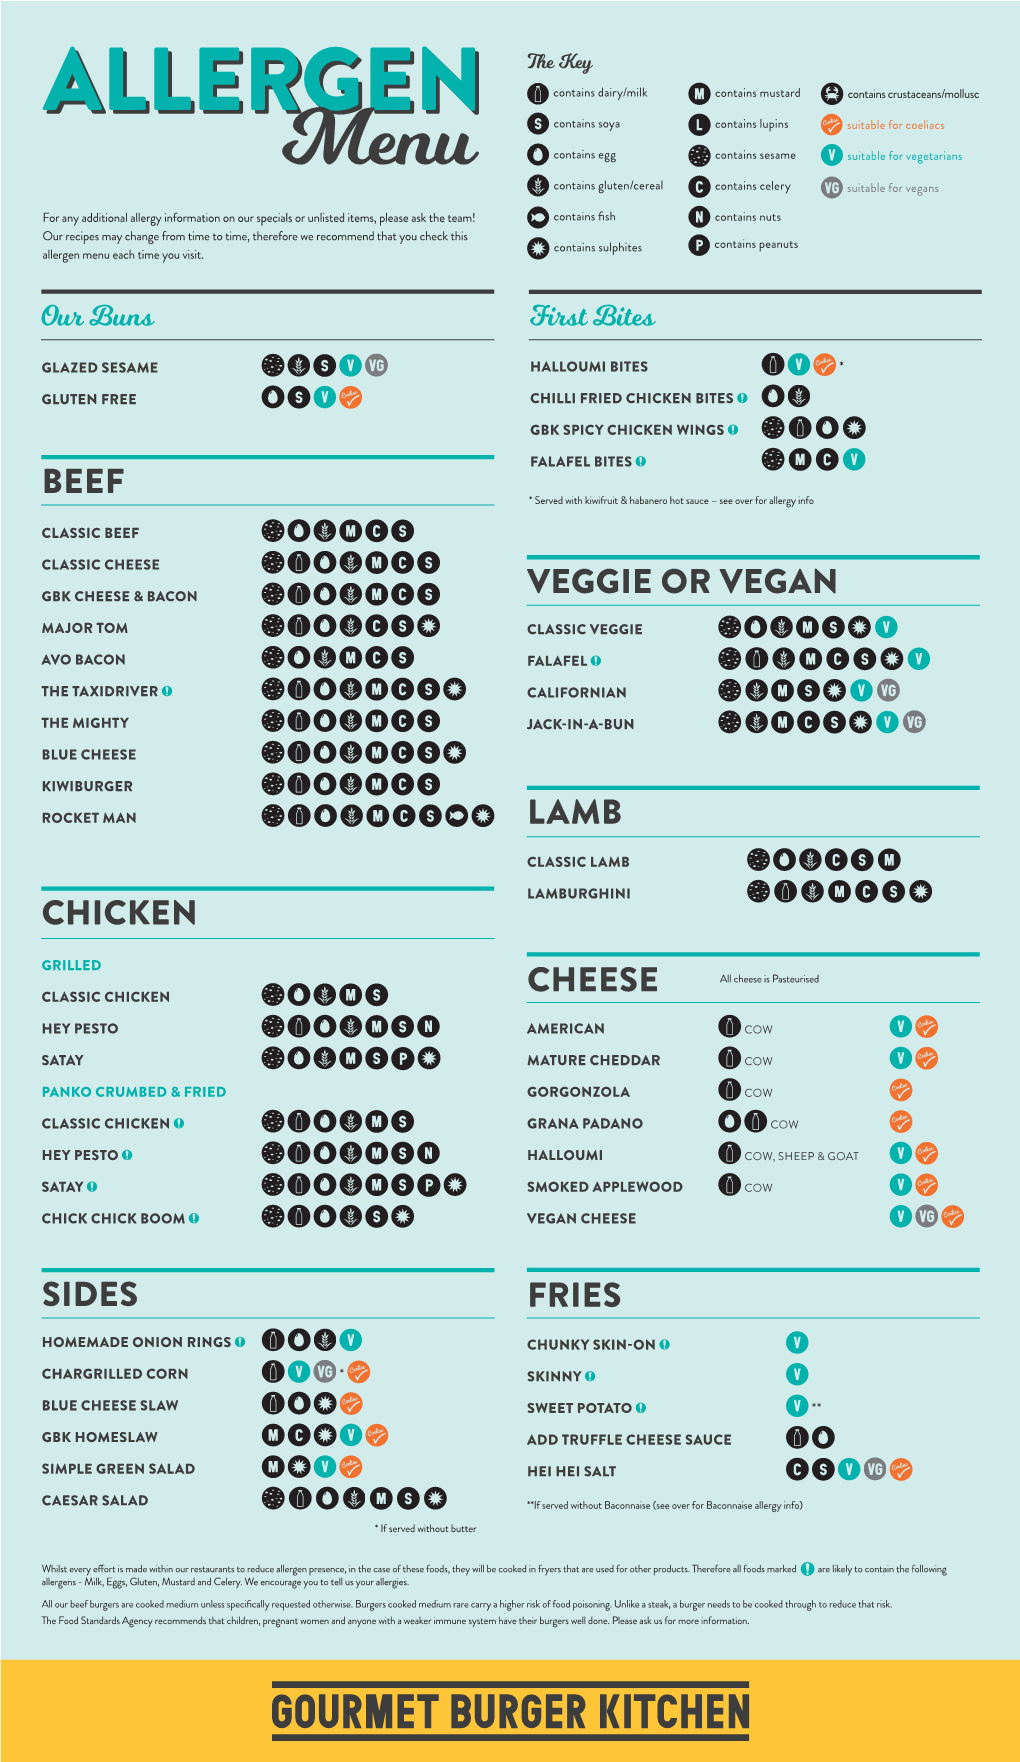 Beef Lamb Fries Sides Veggie Or Vegan Cheese Chicken